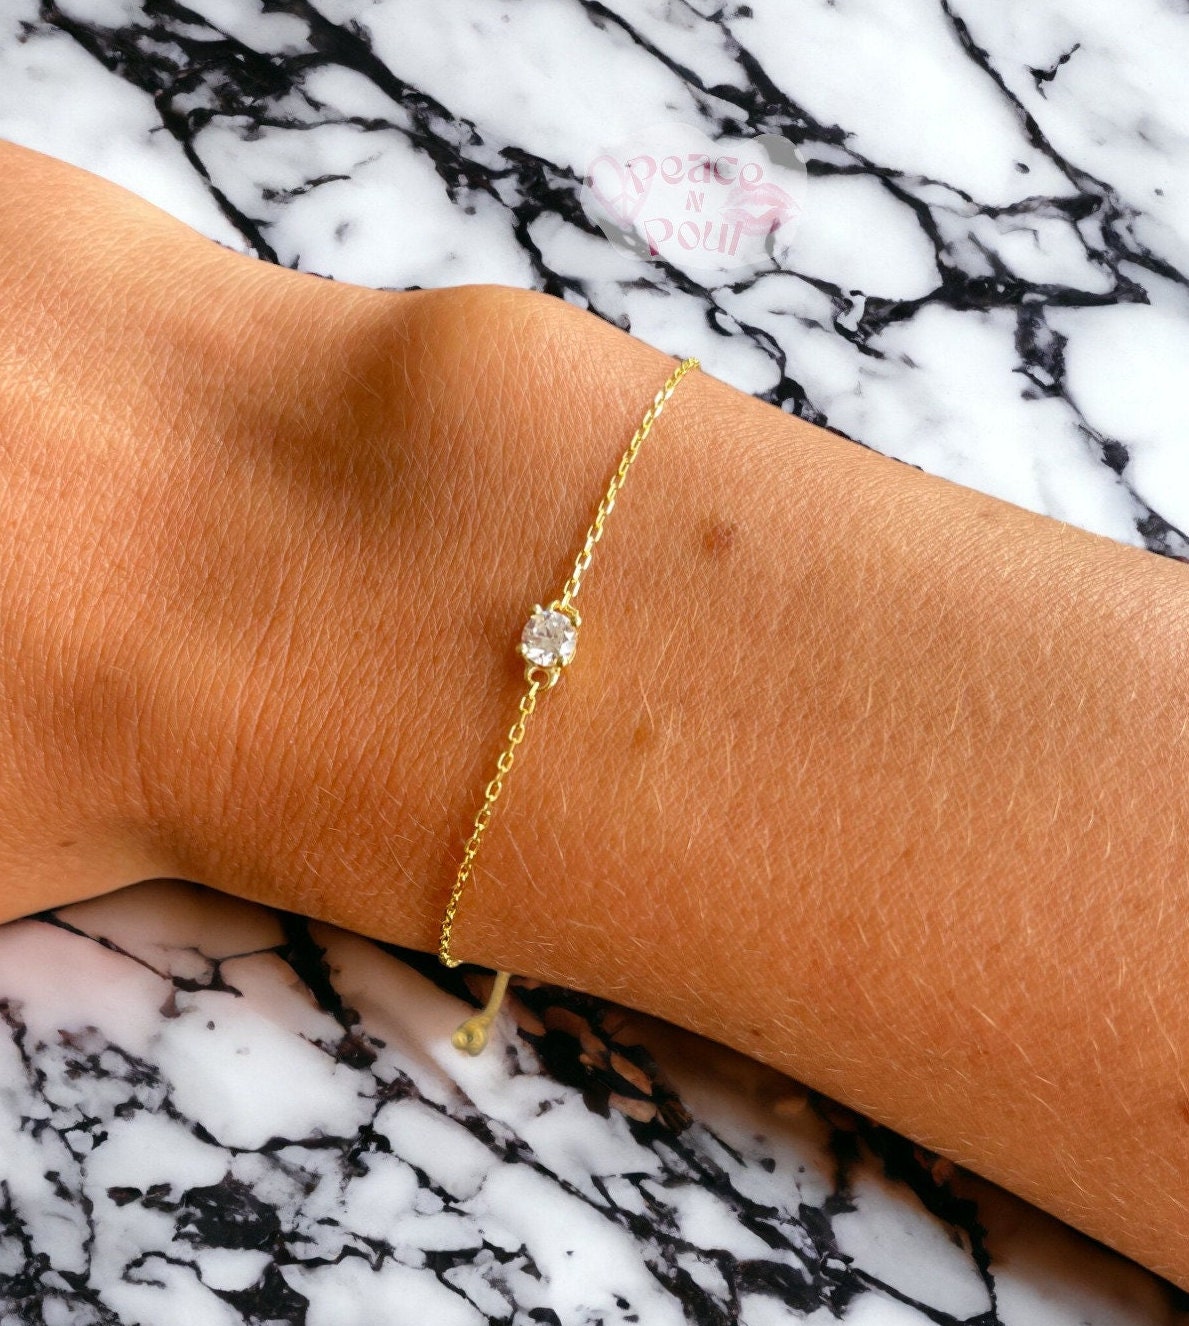 louis vuitton friendship bracelets under $500 ✨ #designershoes #handba, luxury friendship bracelets